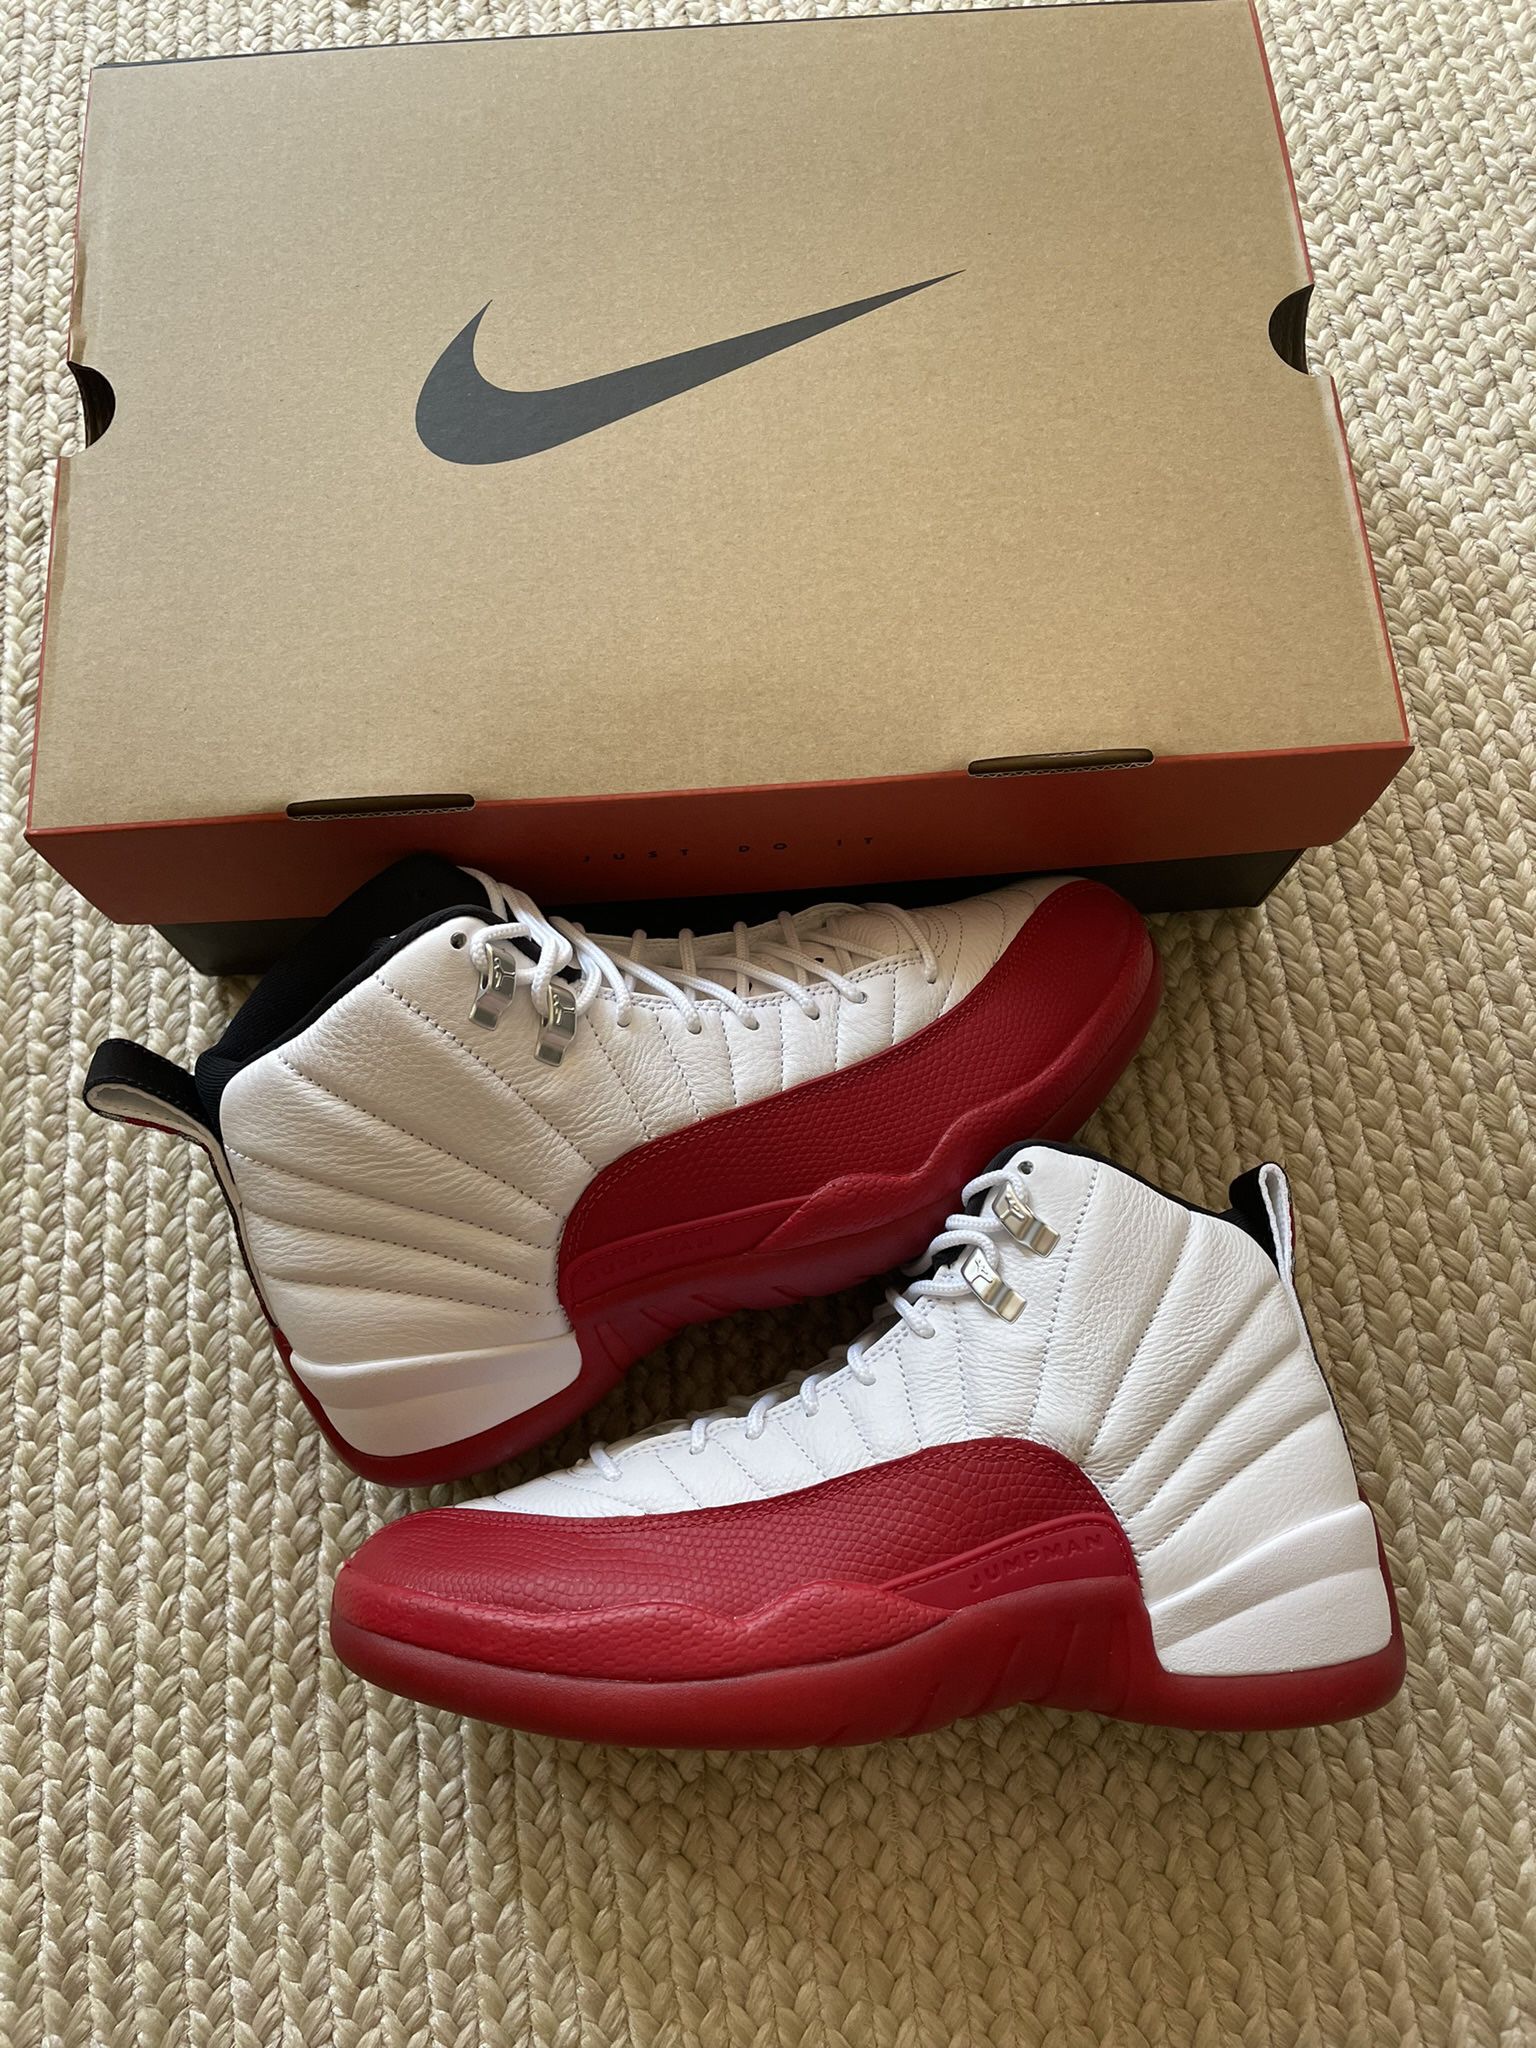 Jordan 12 Cherry 🍒 Size 9.5